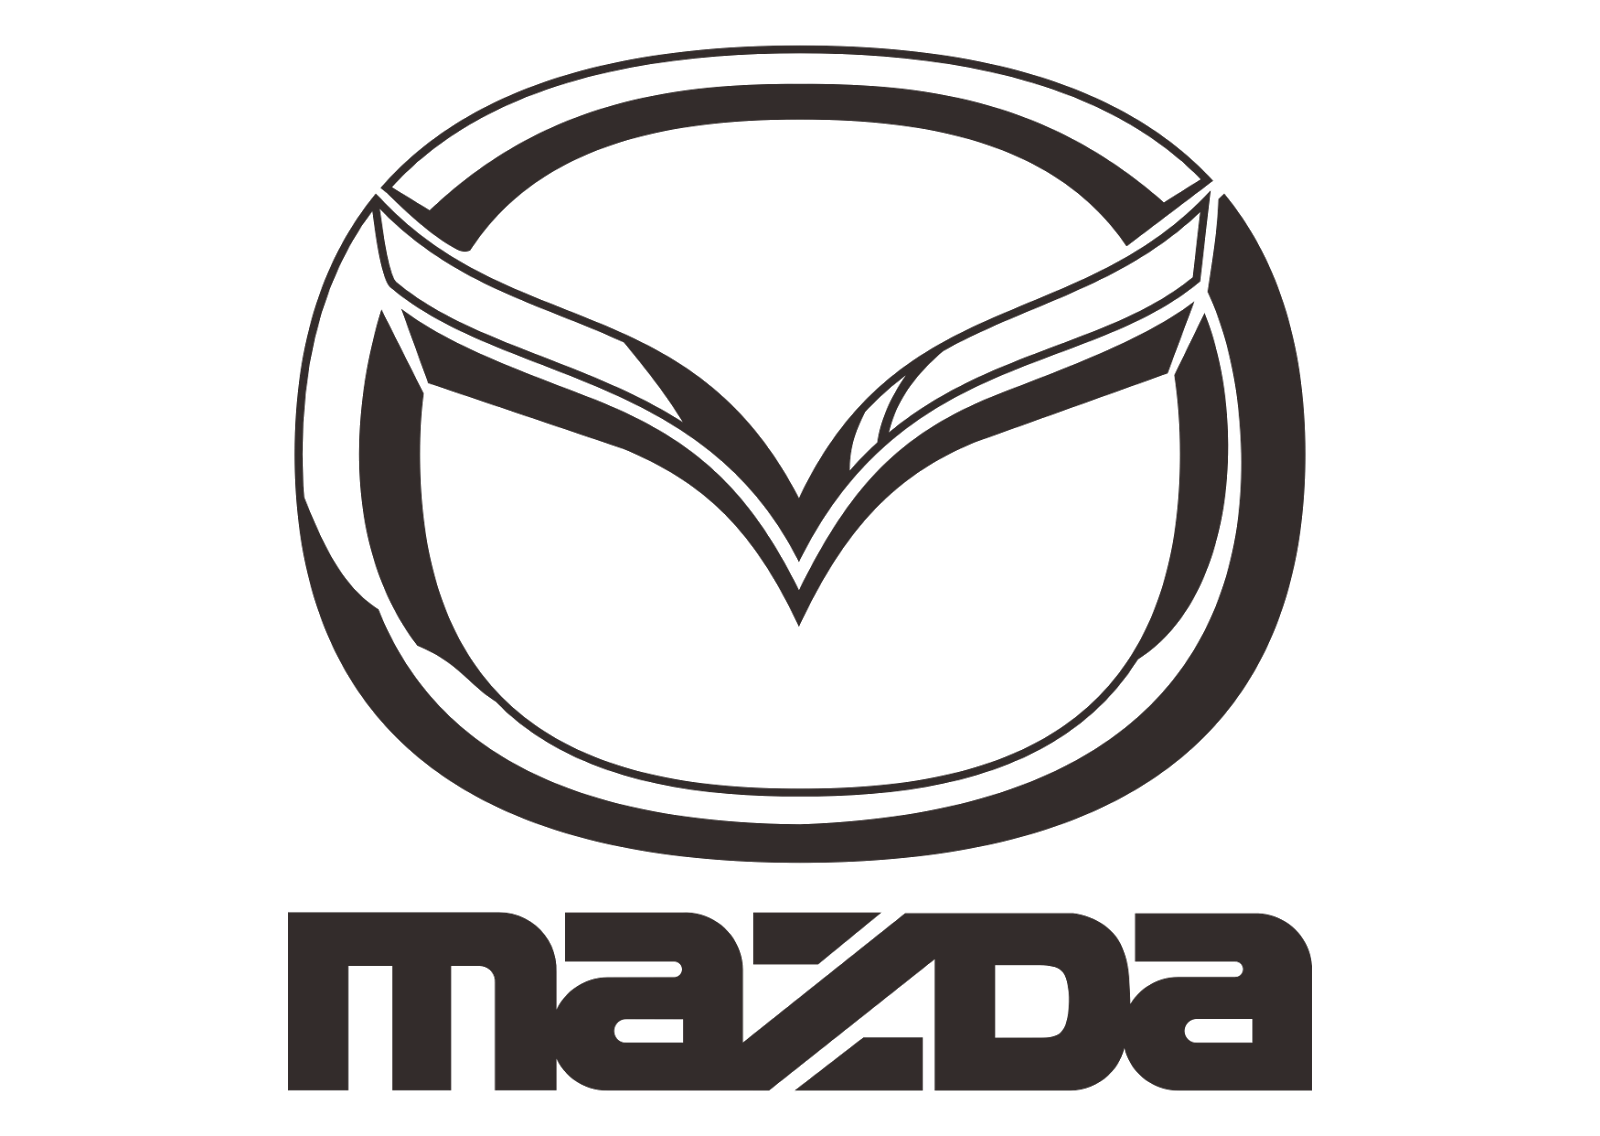 Mazda Logo Png Download - 177